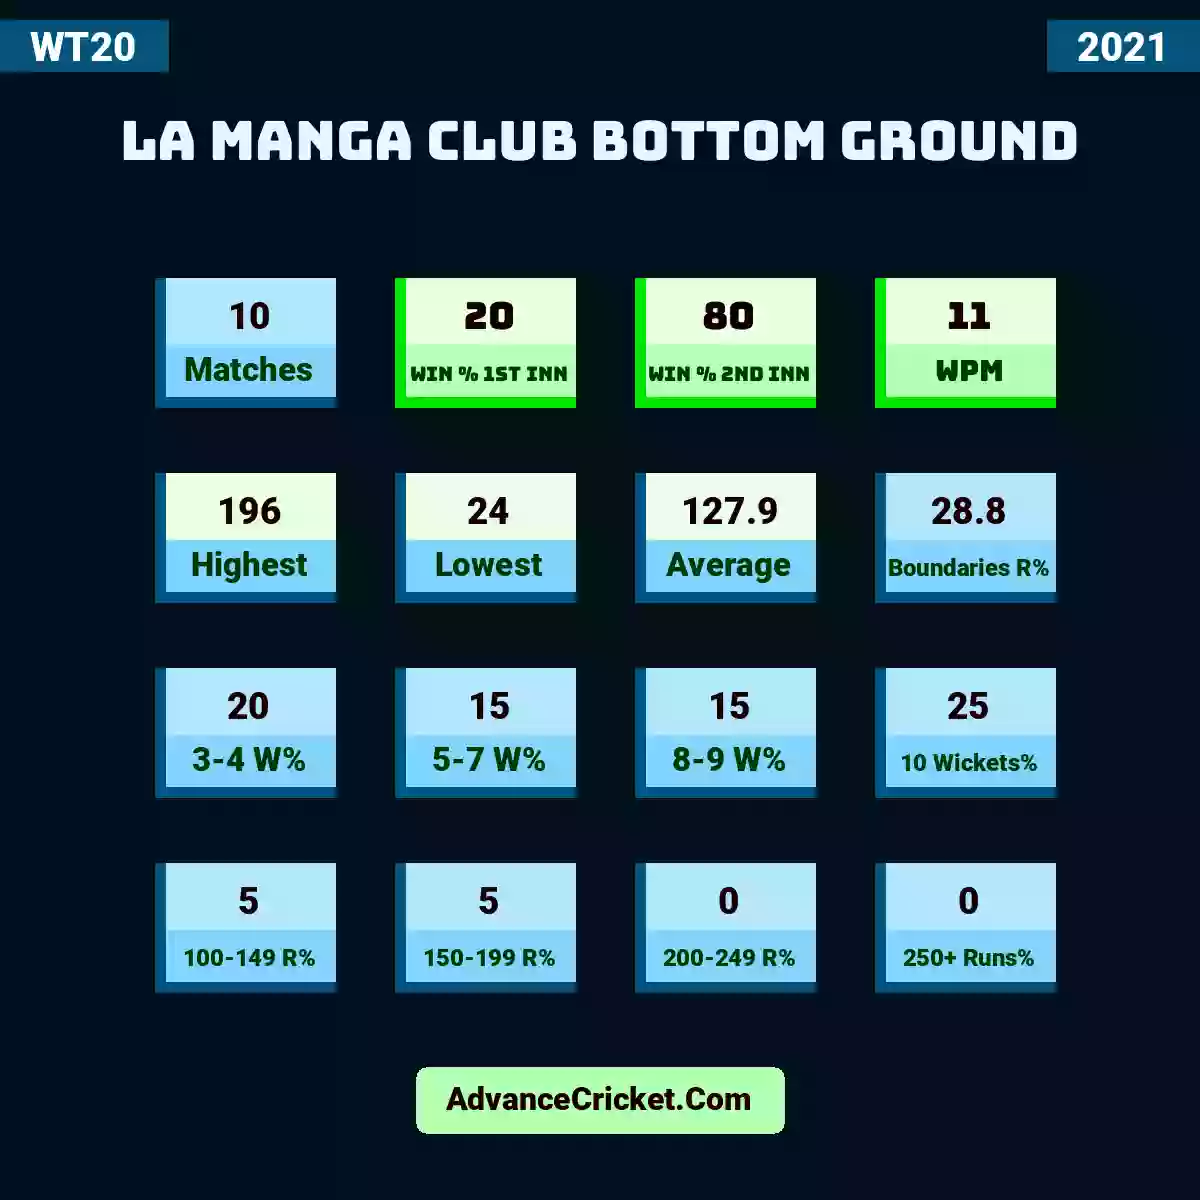 Image showing La Manga Club Bottom Ground with Matches: 10, Win % 1st Inn: 20, Win % 2nd Inn: 80, WPM: 11, Highest: 196, Lowest: 24, Average: 127.9, Boundaries R%: 28.8, 3-4 W%: 20, 5-7 W%: 15, 8-9 W%: 15, 10 Wickets%: 25, 100-149 R%: 5, 150-199 R%: 5, 200-249 R%: 0, 250+ Runs%: 0.